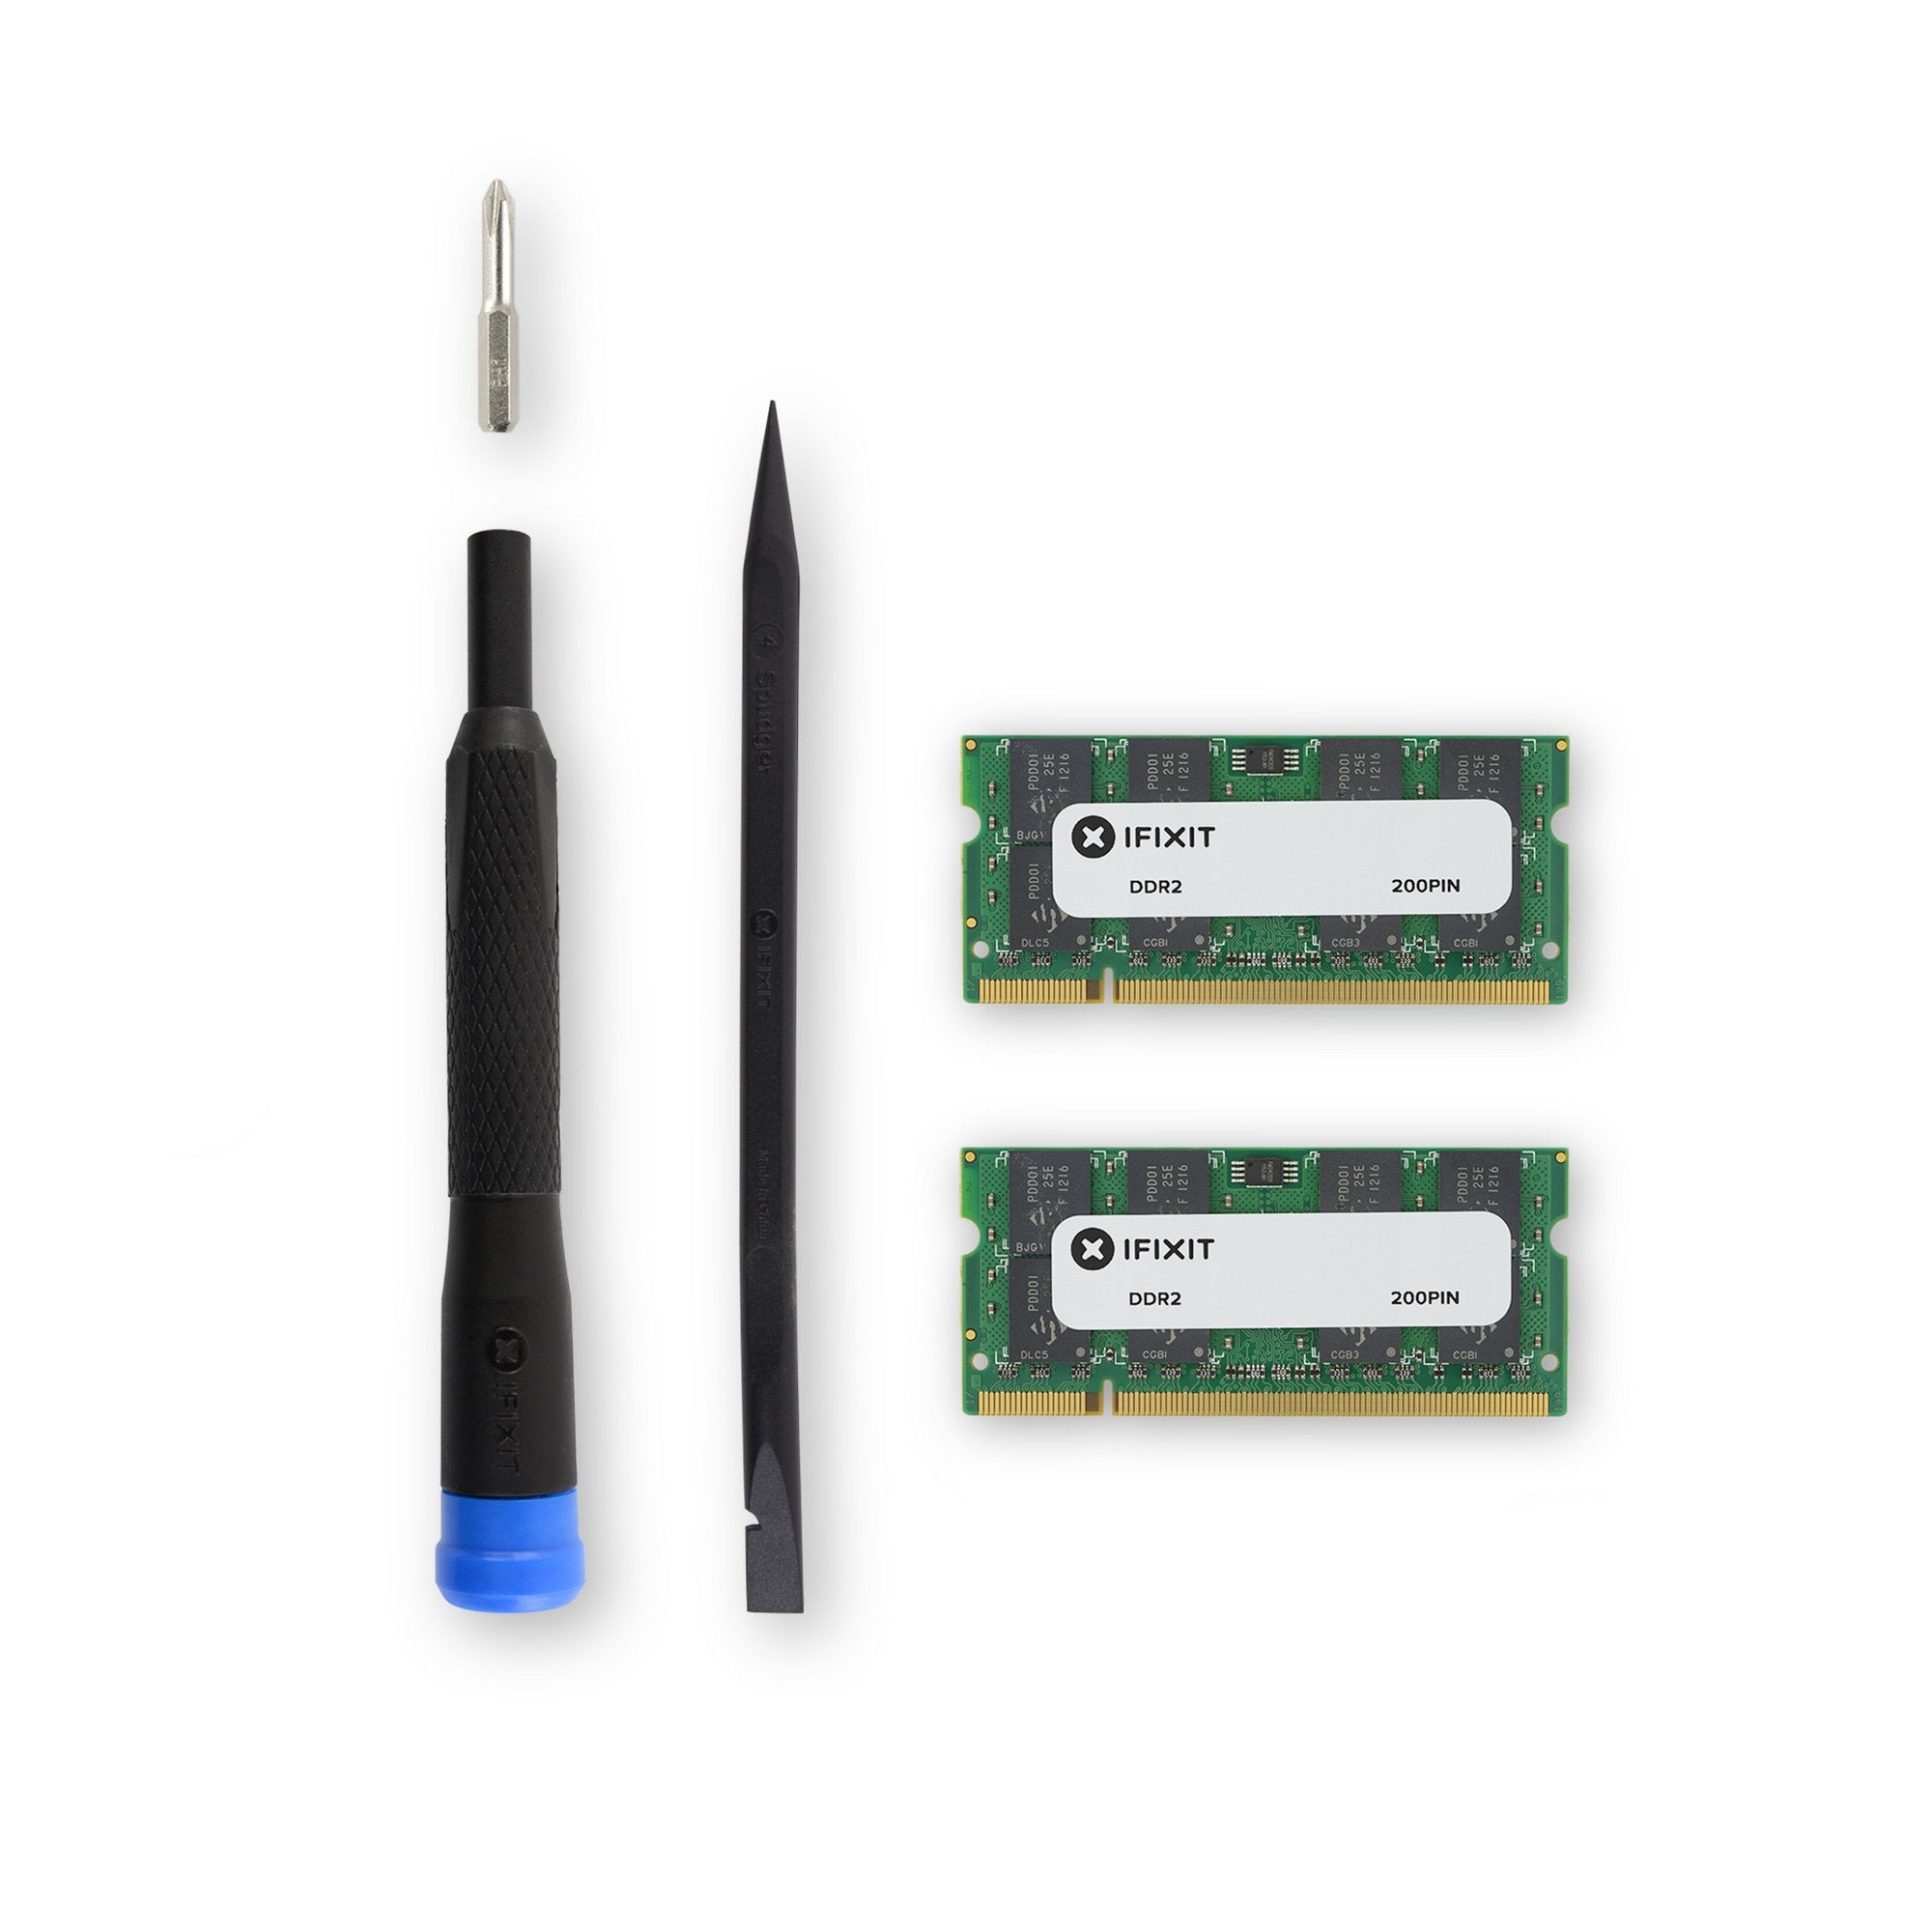 iMac Intel 24" EMC 2211 (Early 2008) Memory Maxxer RAM Upgrade Kit